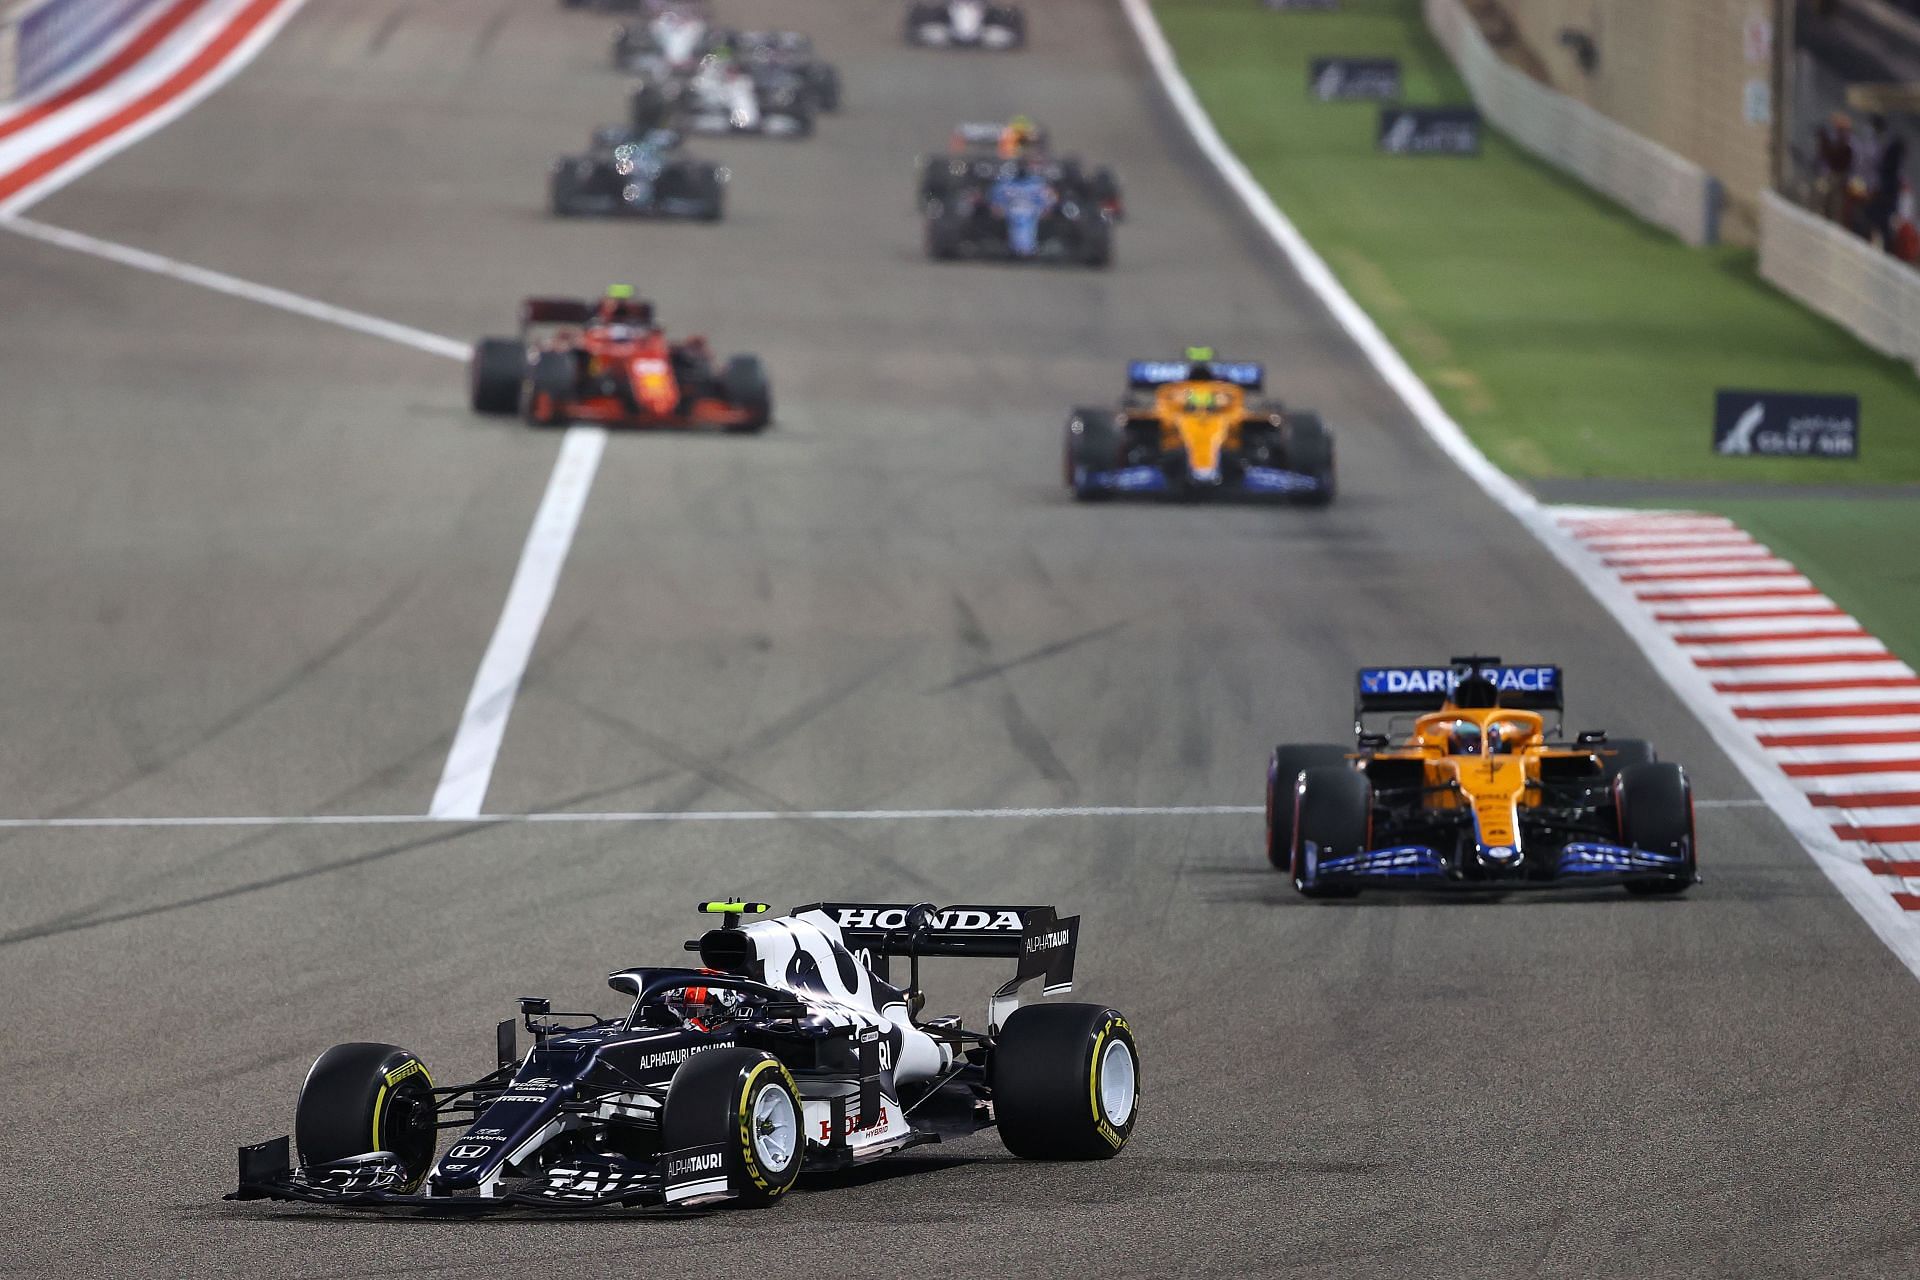 The Bahrain GP kicks off the 2022 F1 season this weekend